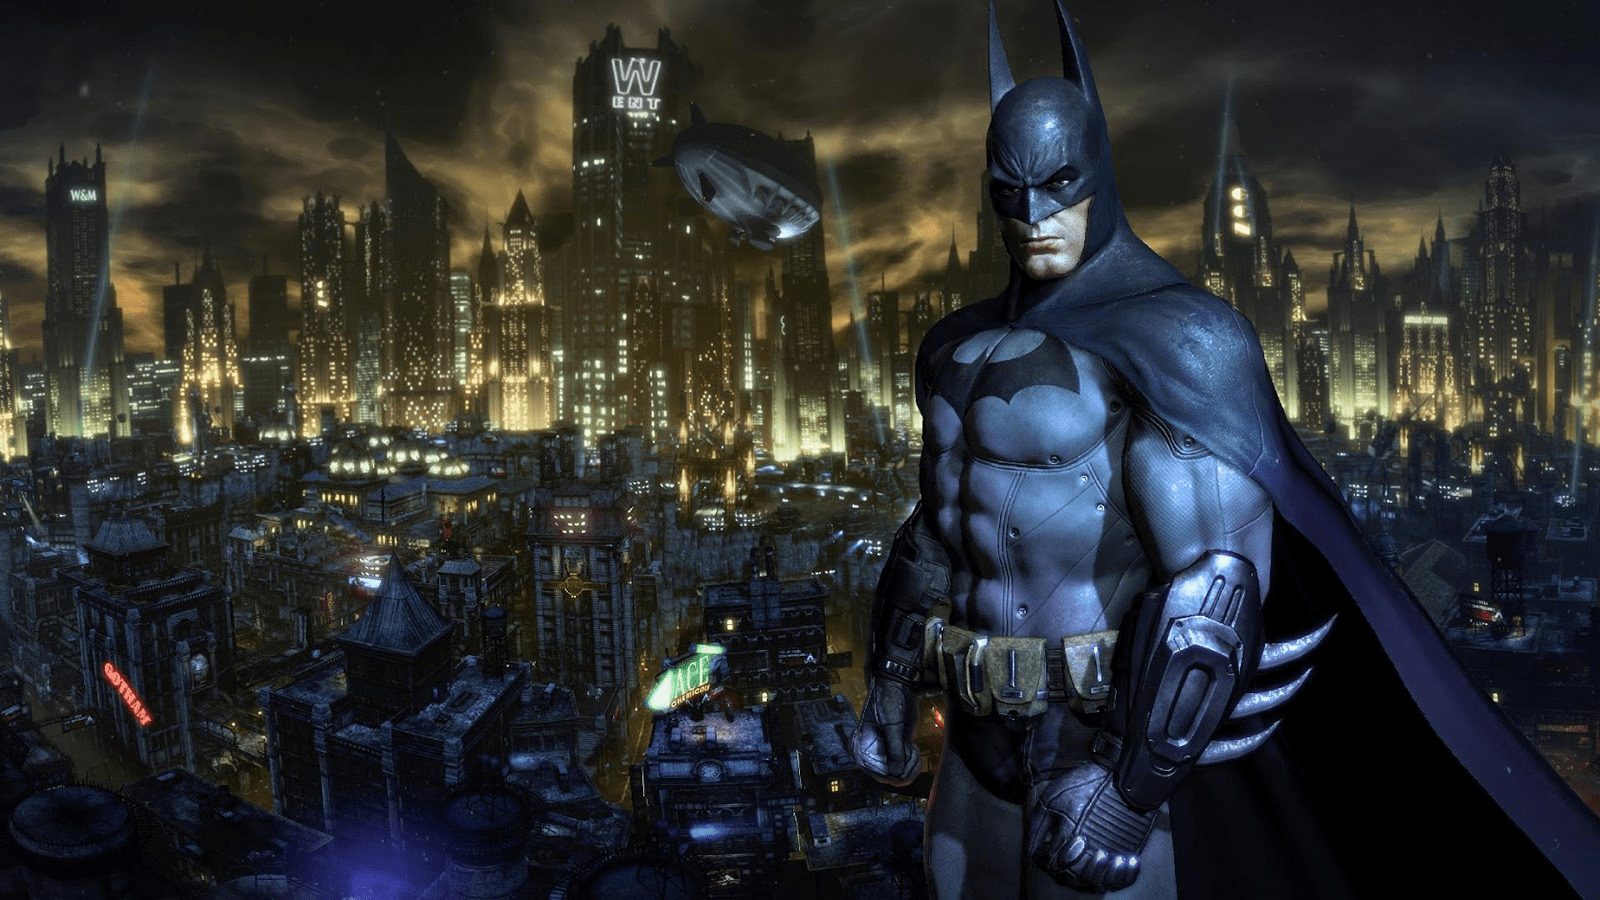 Batman Arkham City - Games for Low End PC in 2020